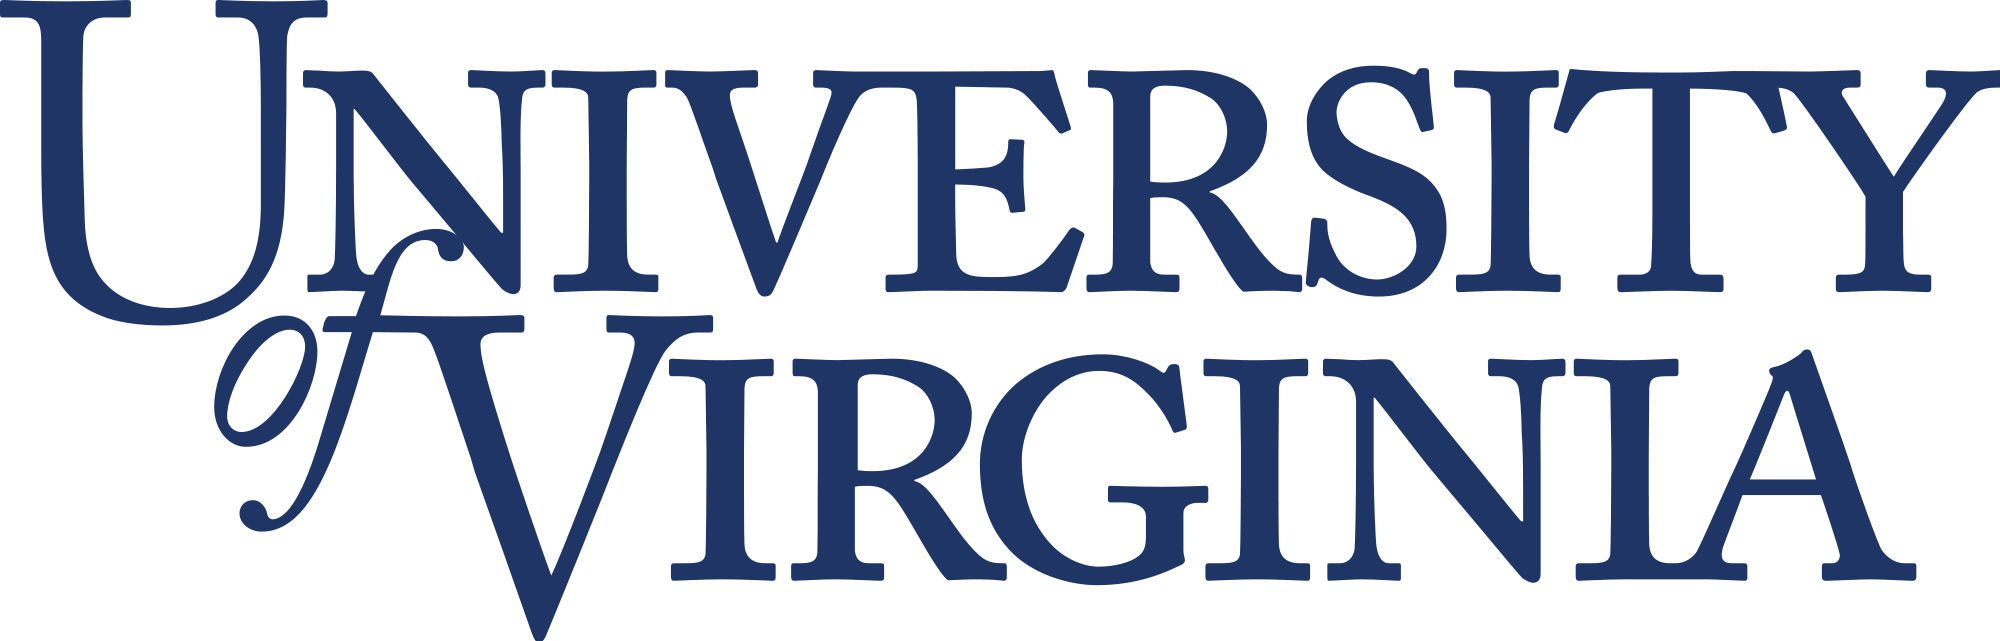 university of virginia logo 08